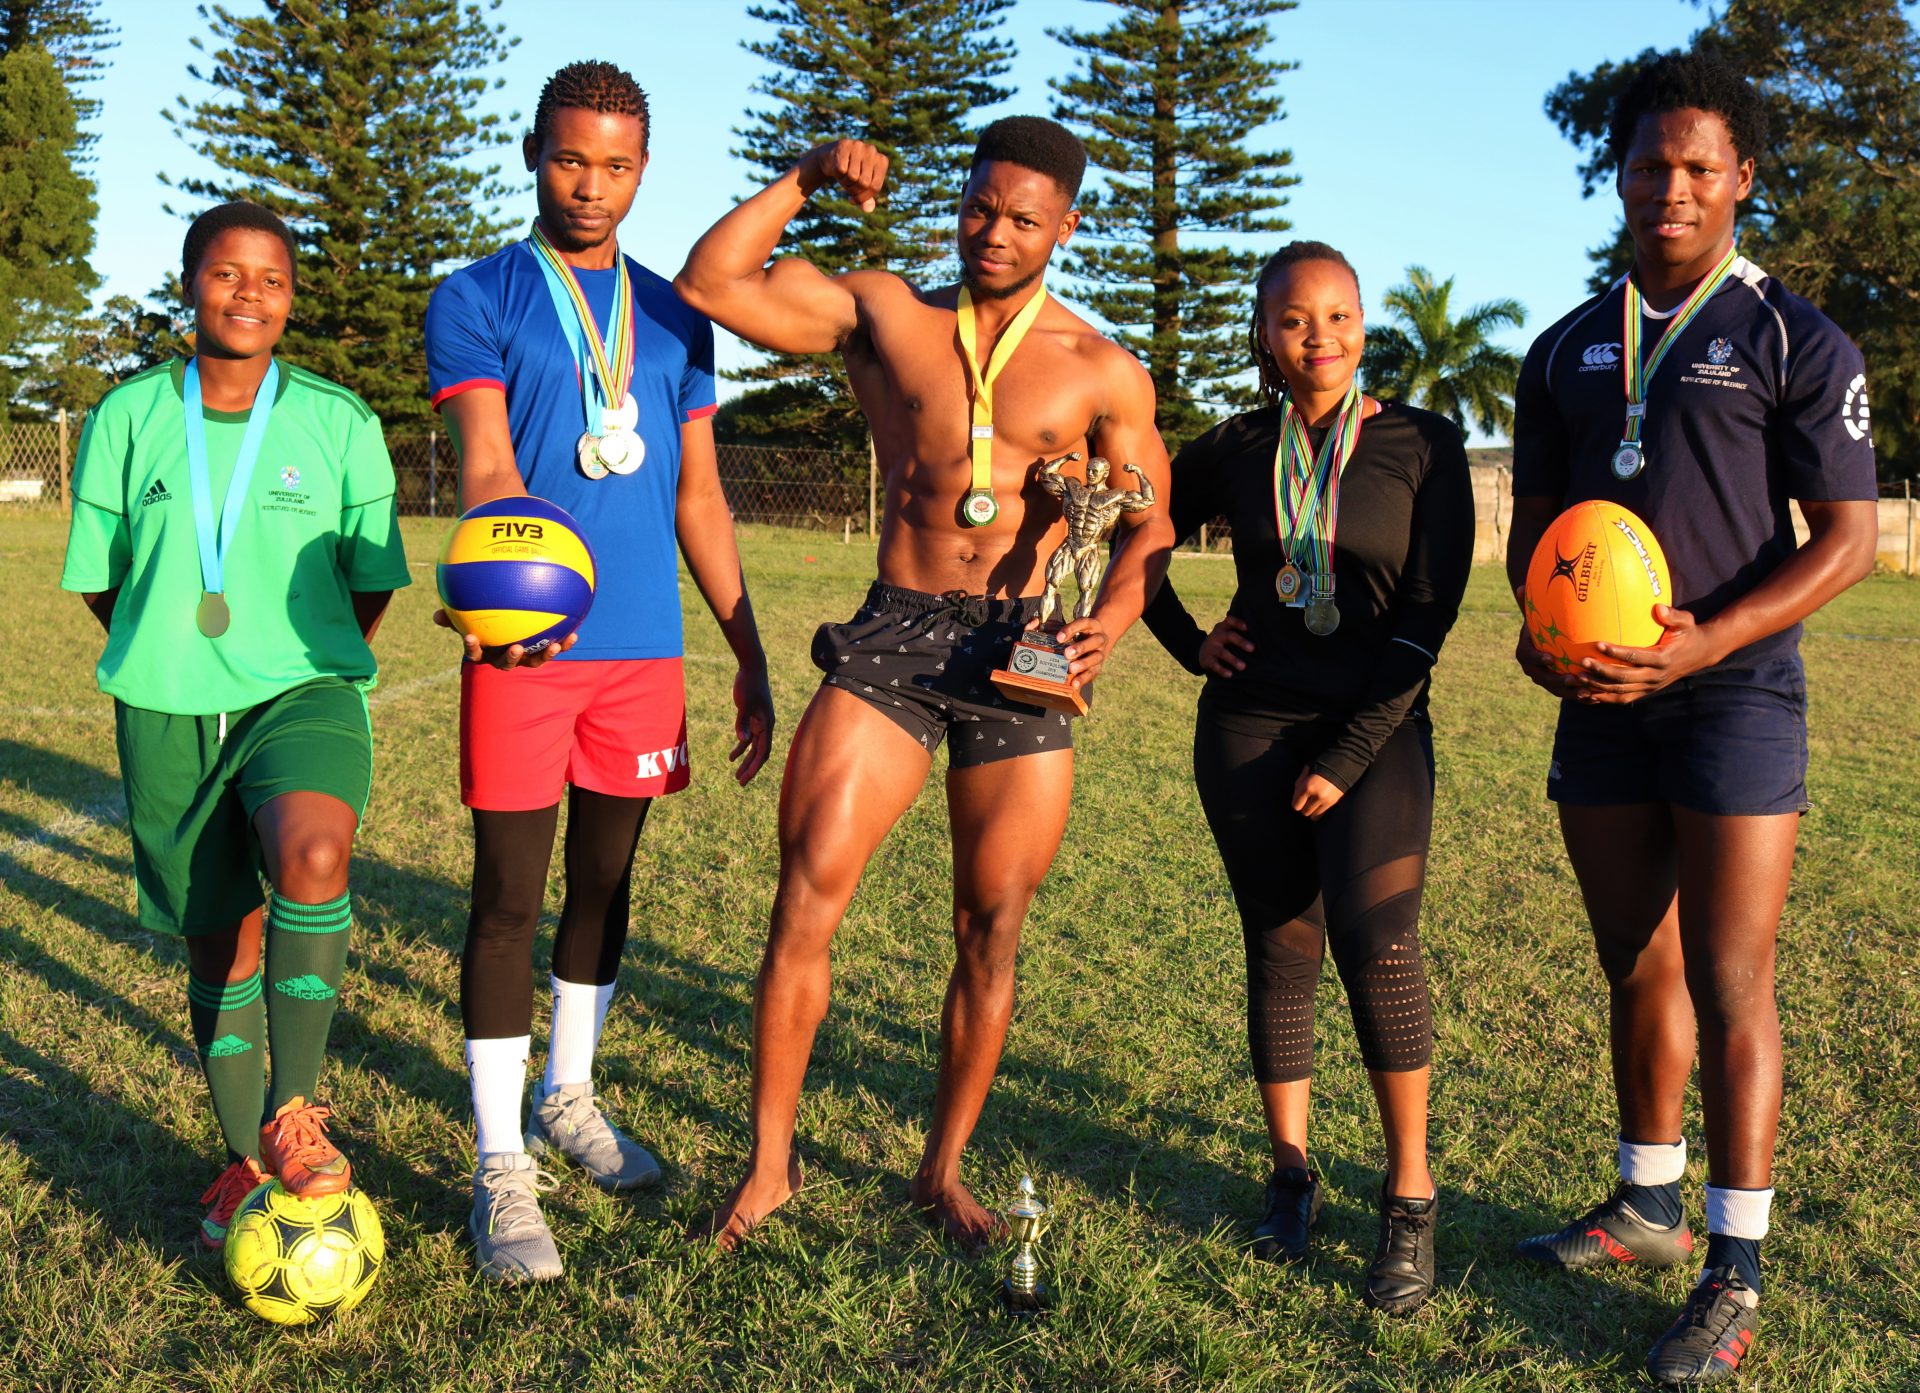 UNIZULU Ladies Swallows player Mbaliyethu Mhlongo, Volleyball team player Sandile Khoza, Senzo Mthembu from Bodybuilding, Lindelwa Ngubane from UNIZULU Aerobics team and Rugby team Captain